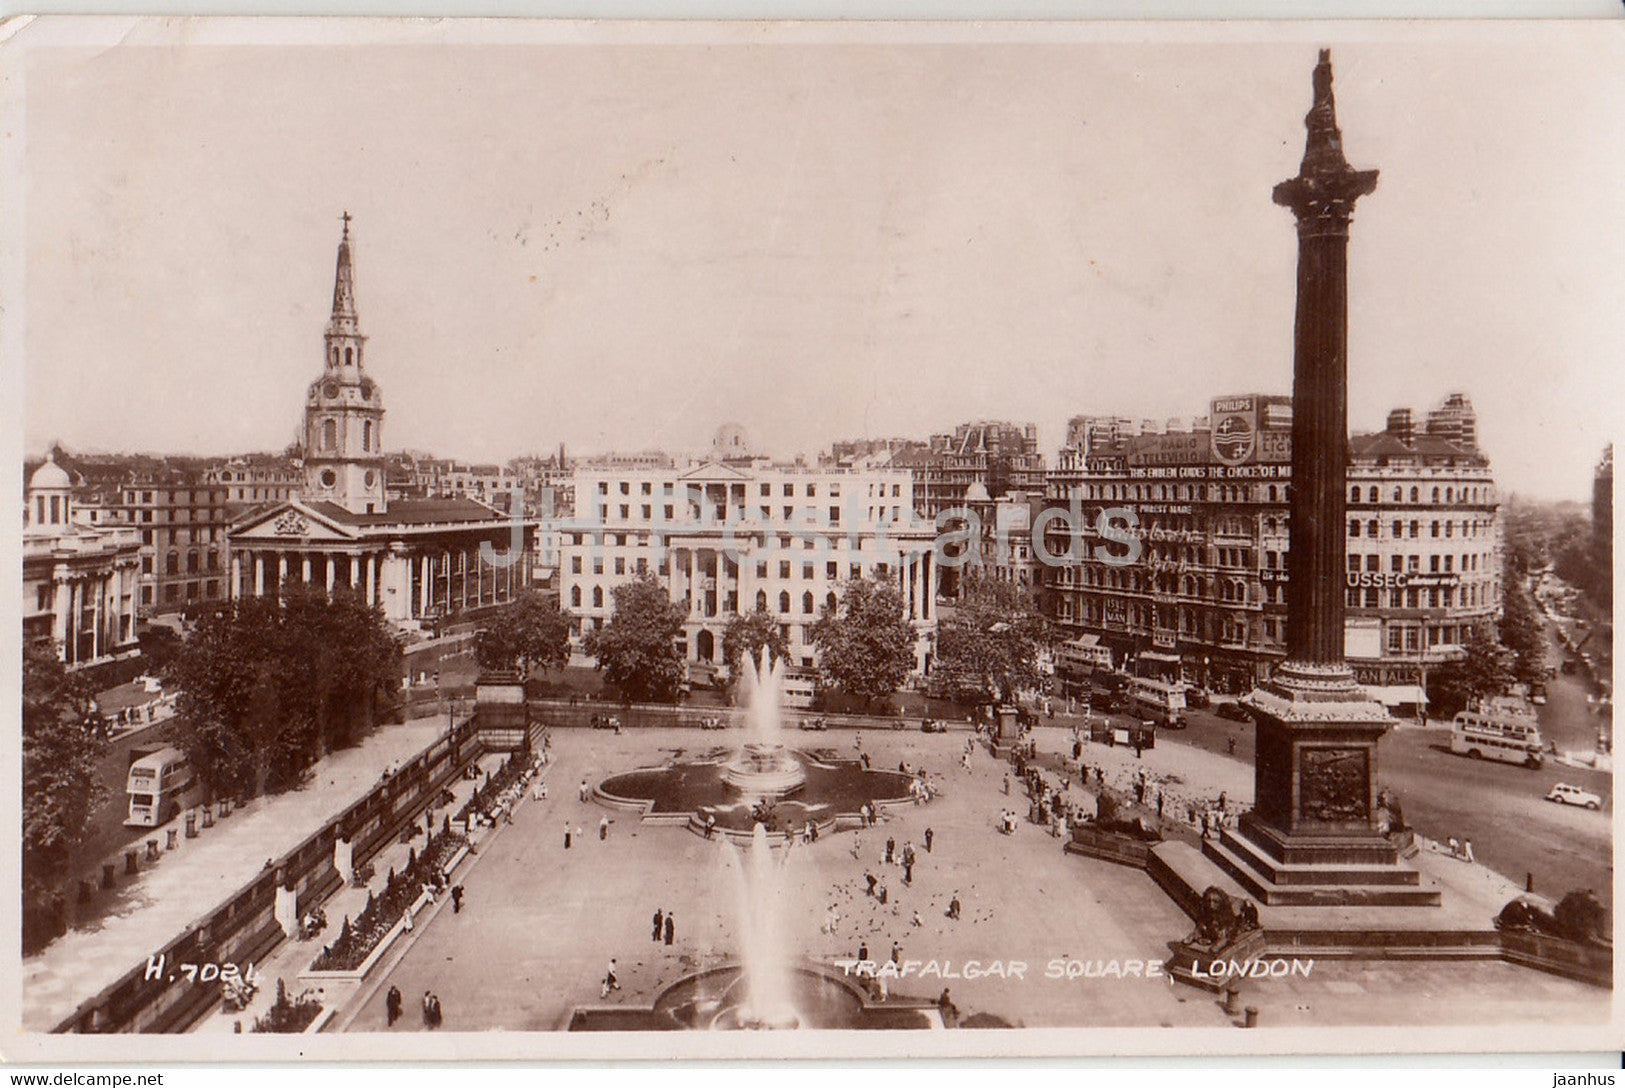 London - Trafalgar Square - Valentine - 7024 - old postcard - England - United Kingdom - used - JH Postcards